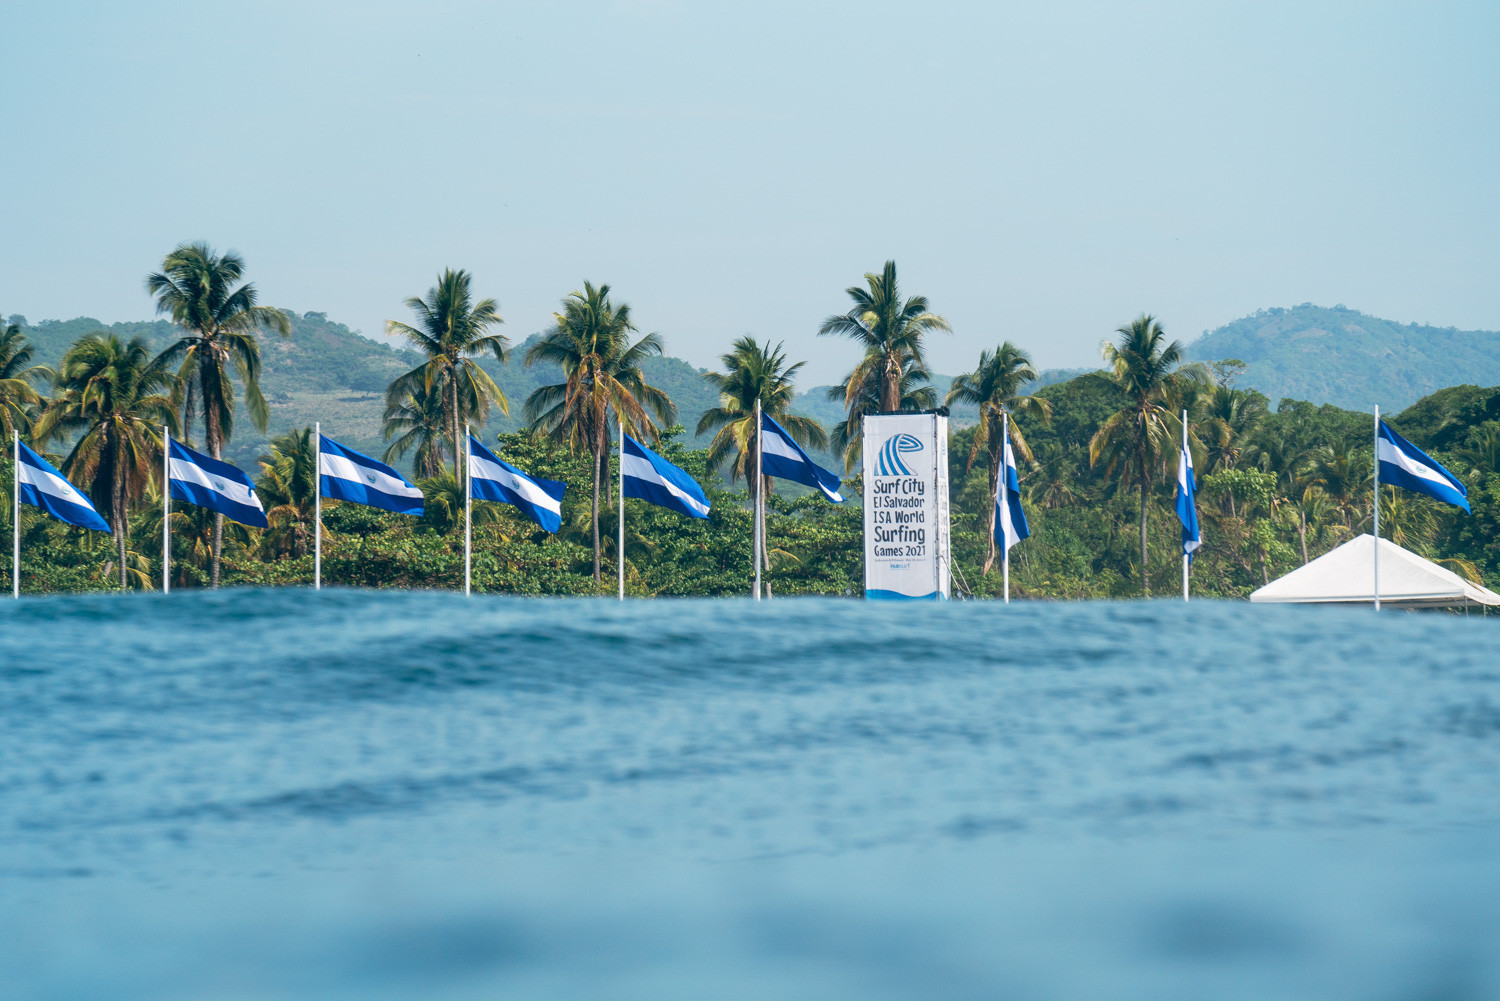 Dates set for 2023 ISA World Surfing Games in El Salvador